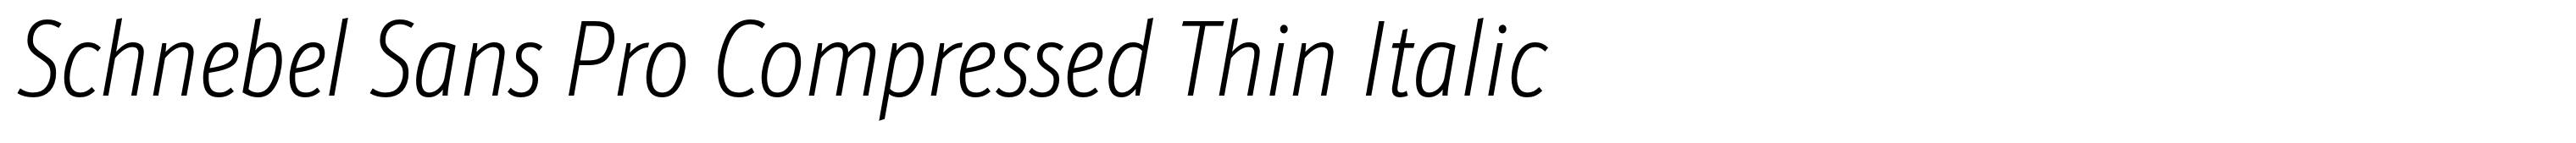 Schnebel Sans Pro Compressed Thin Italic